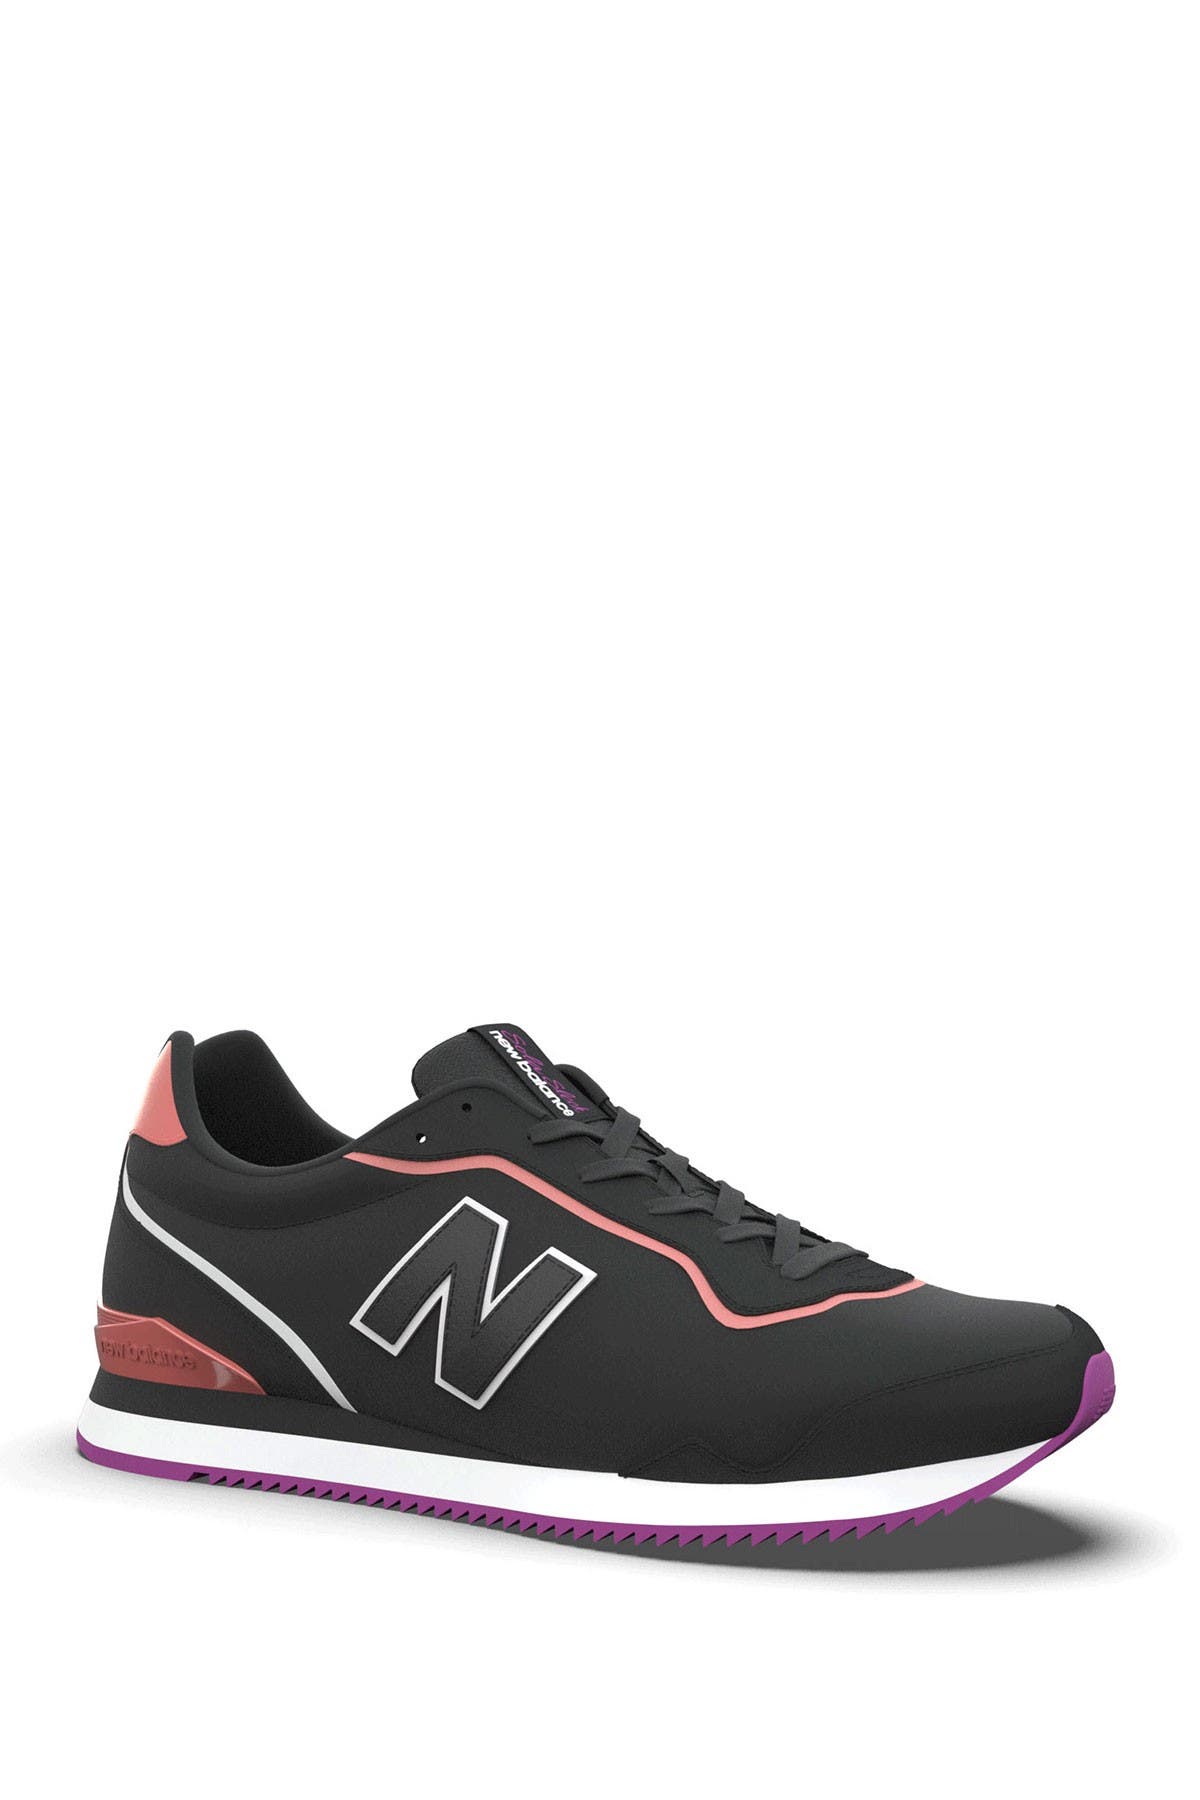 New Balance Sola Sleek Classic Running Shoe In Black